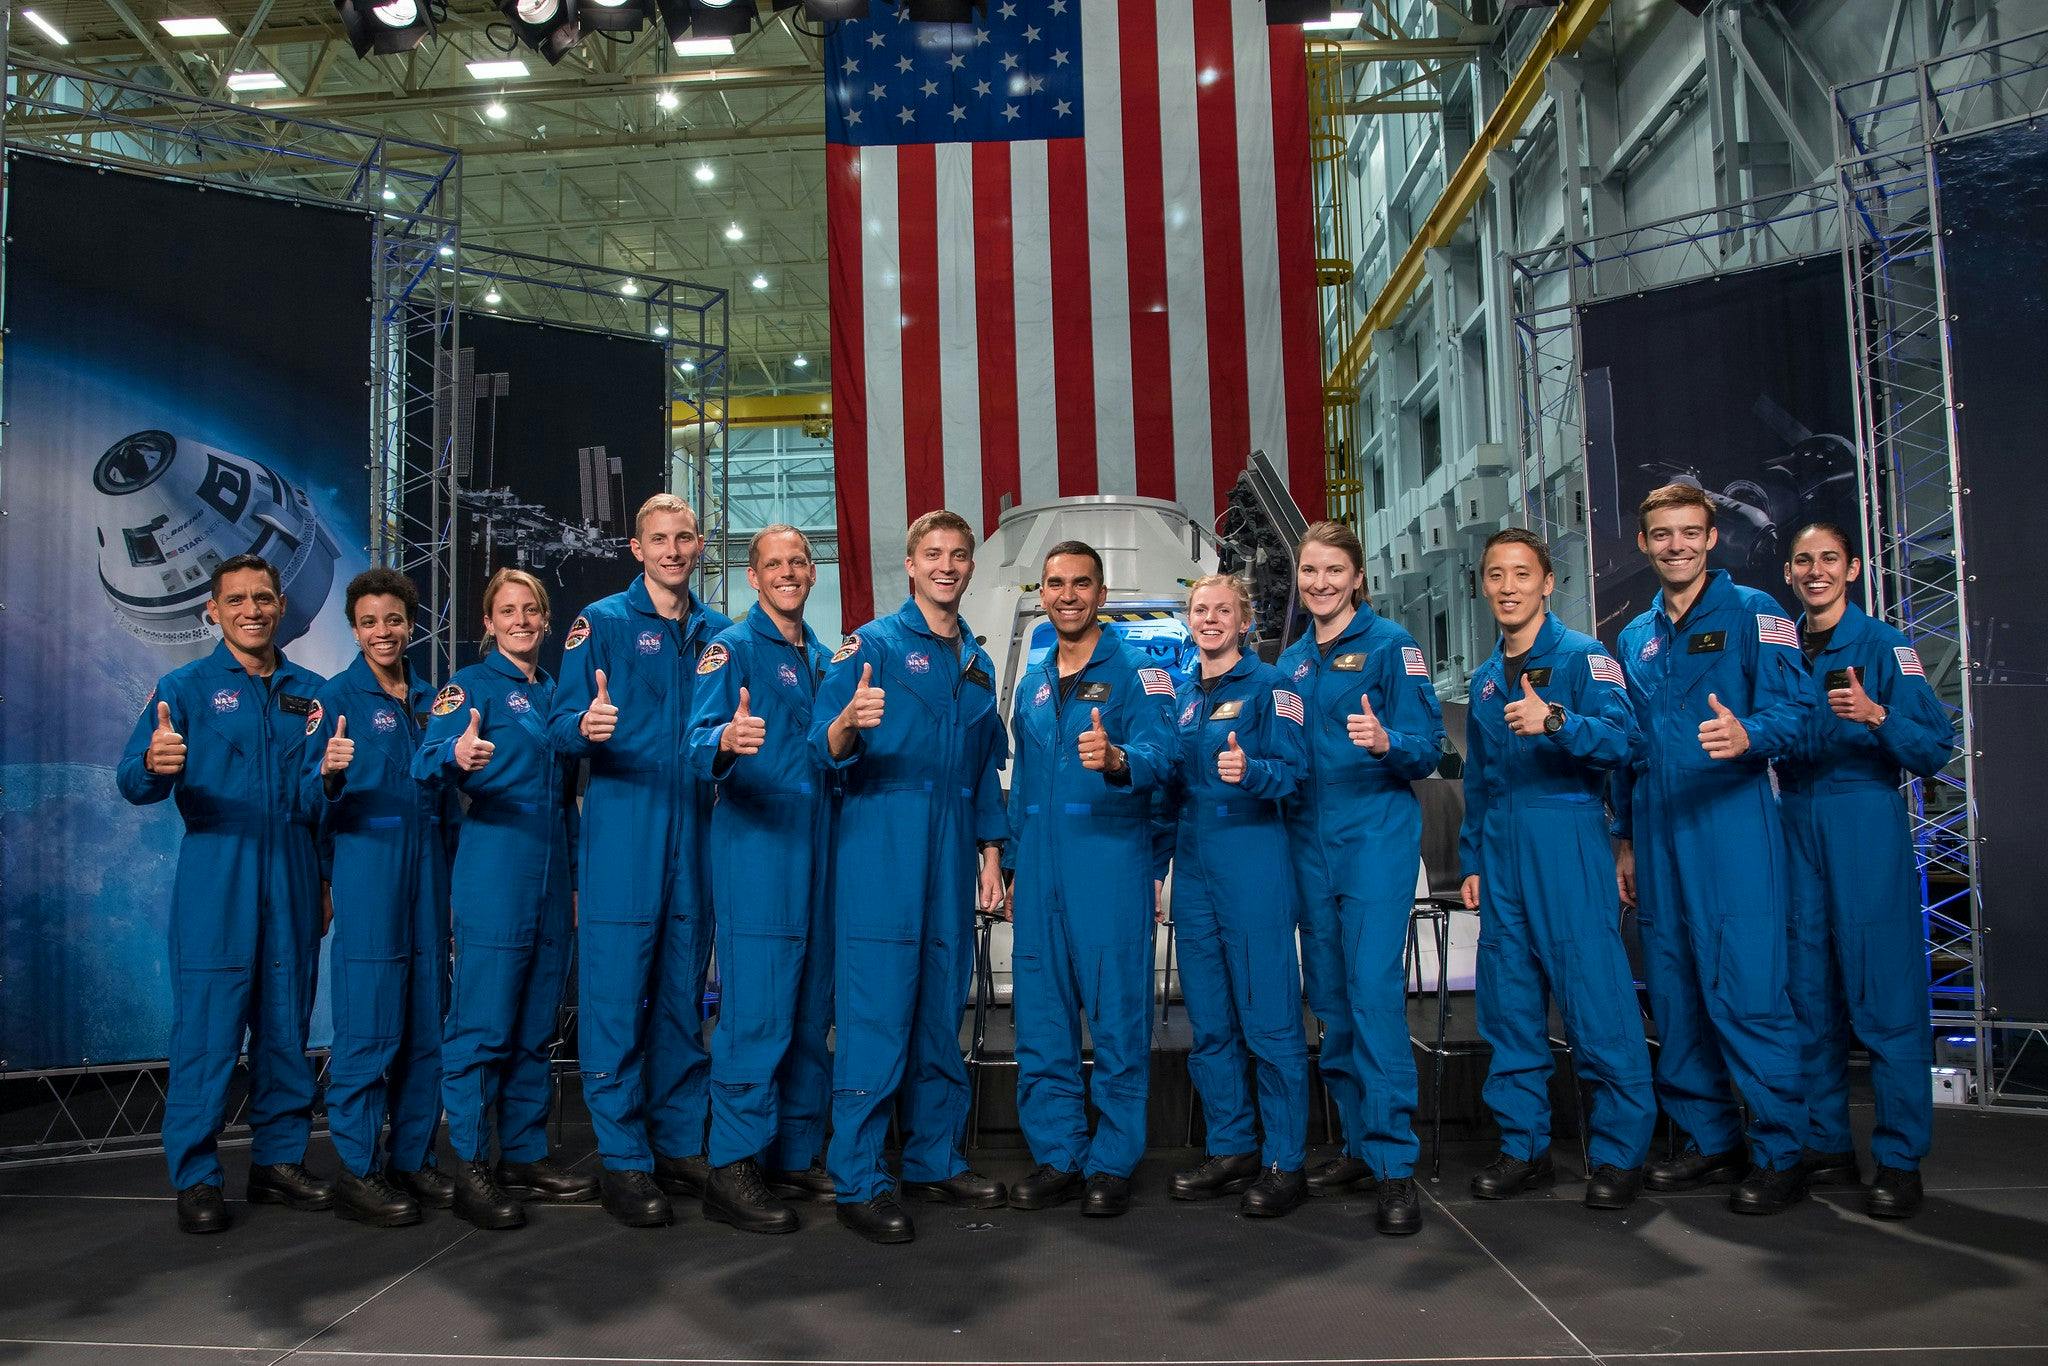 NASA introduced 12 new astronaut candidates, (from left) Francisco Rubio, Jessica Watkins, Loral O’Hara, Warren Hoburg, Robert Hines, Mathew Dominick, Raja Chari, Zena Cardman, Kayla Barron, Jonathan Kim, Robb Kulin and Jasmin Moghbeli, at NASA’s Johnson Space Center in Houston, Texas.